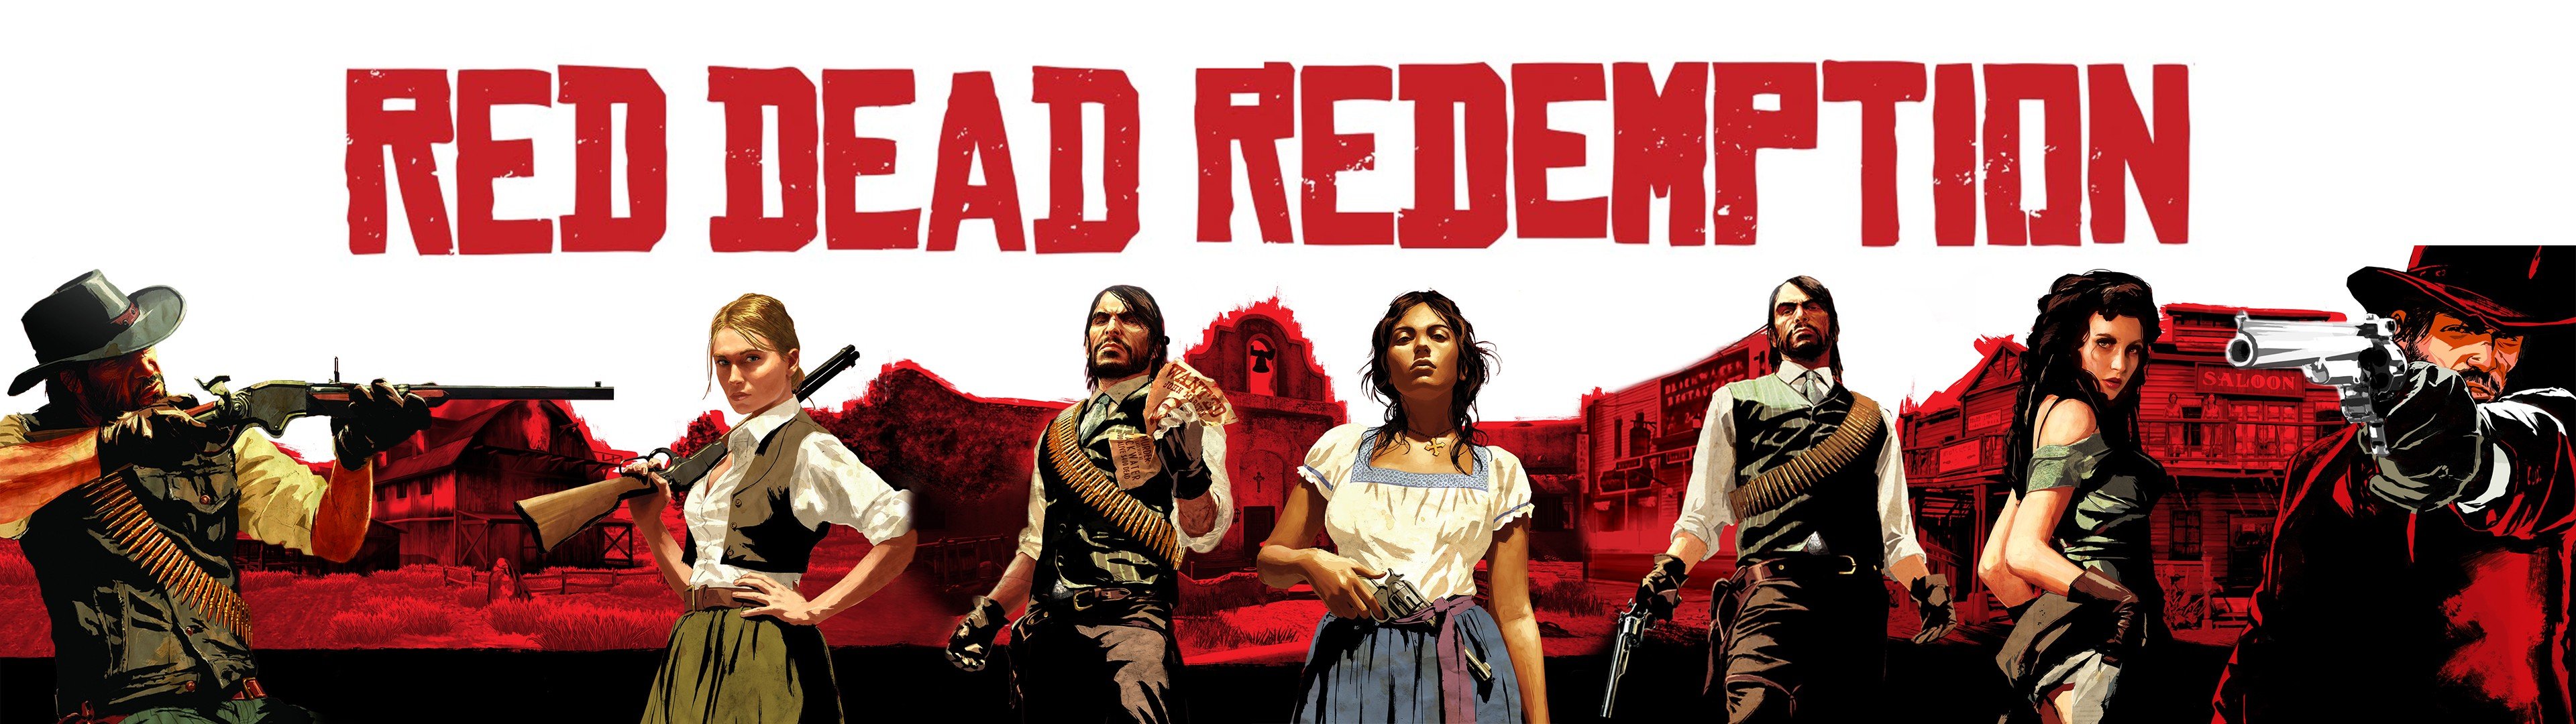 red, Dead, Redemption, Western, Action, Adventure,  64 Wallpaper